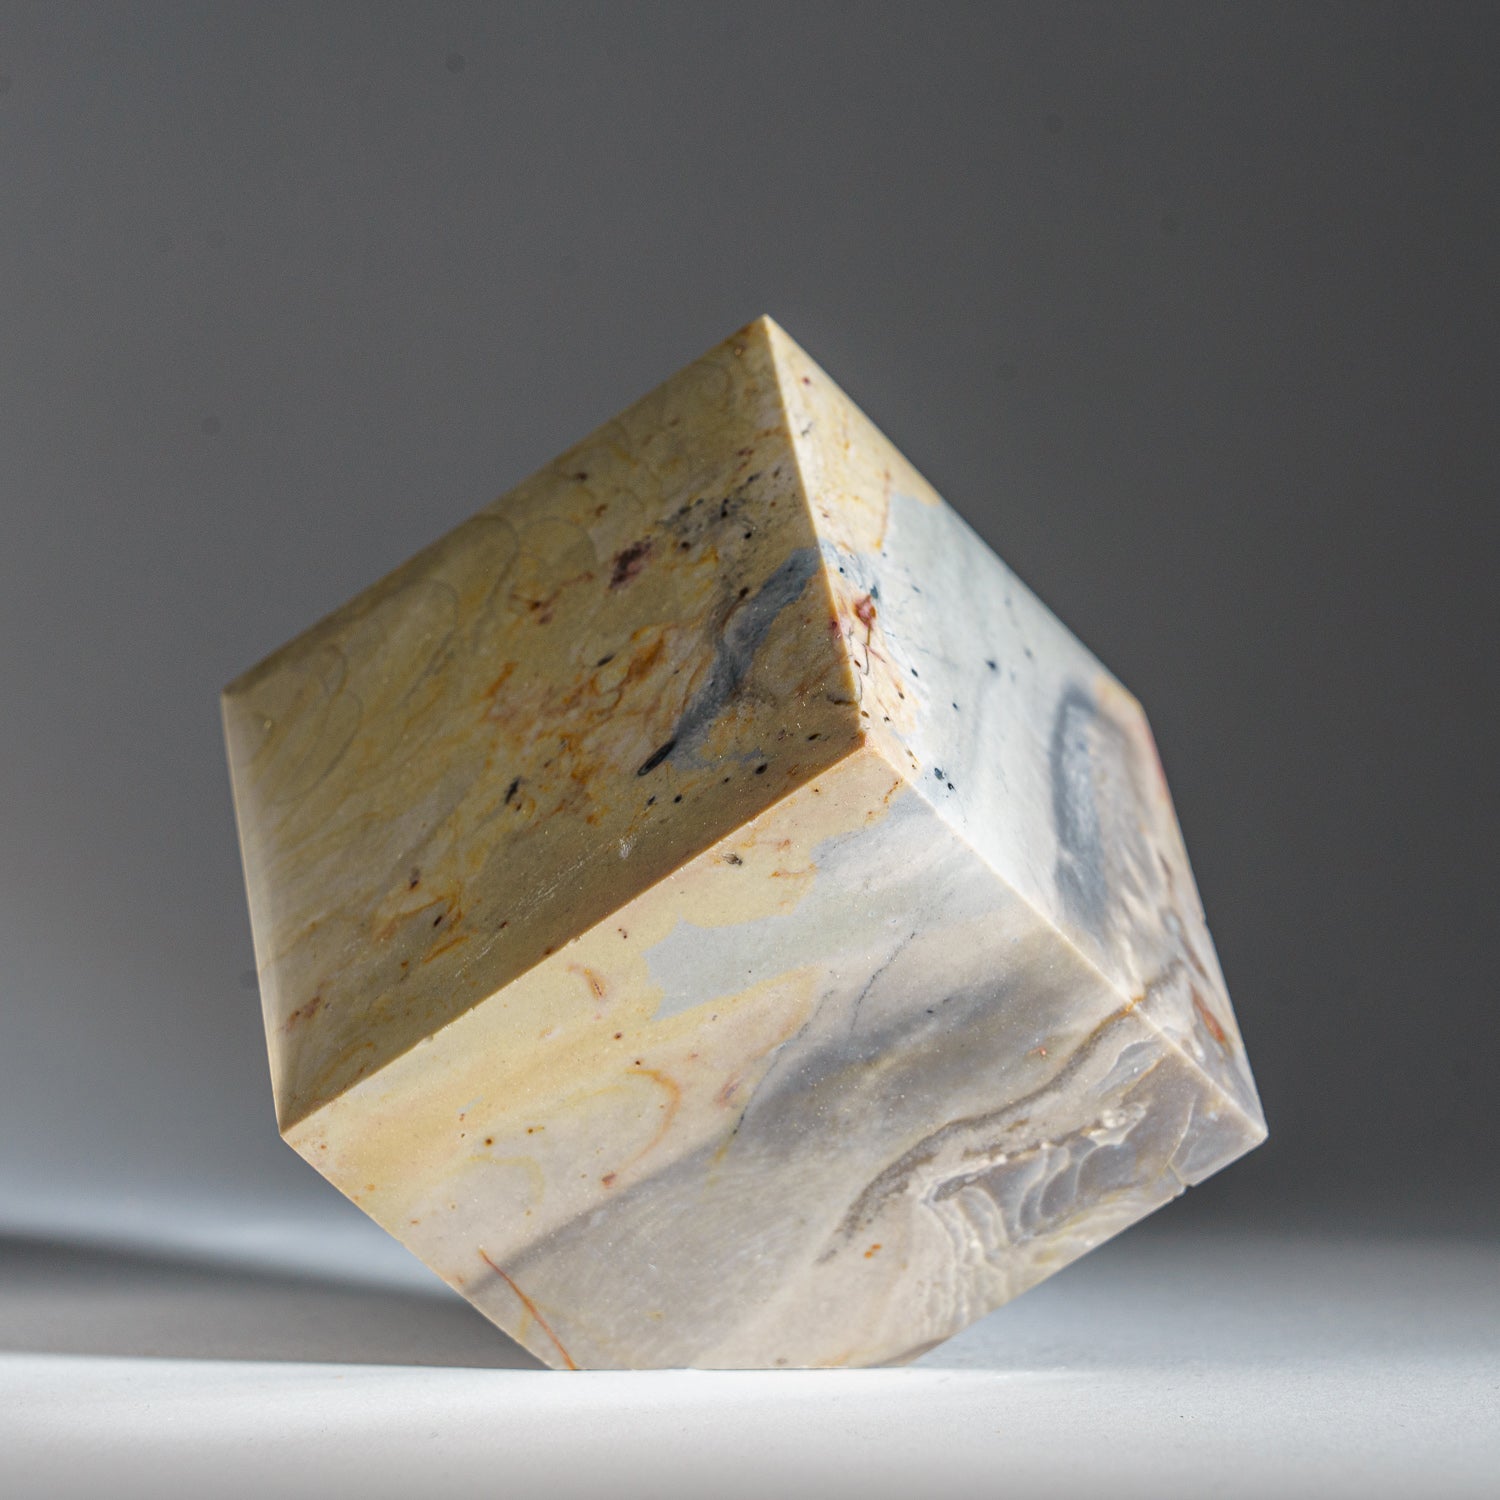 Polished Polychrome Jasper Cube from Madagascar (3 lbs)